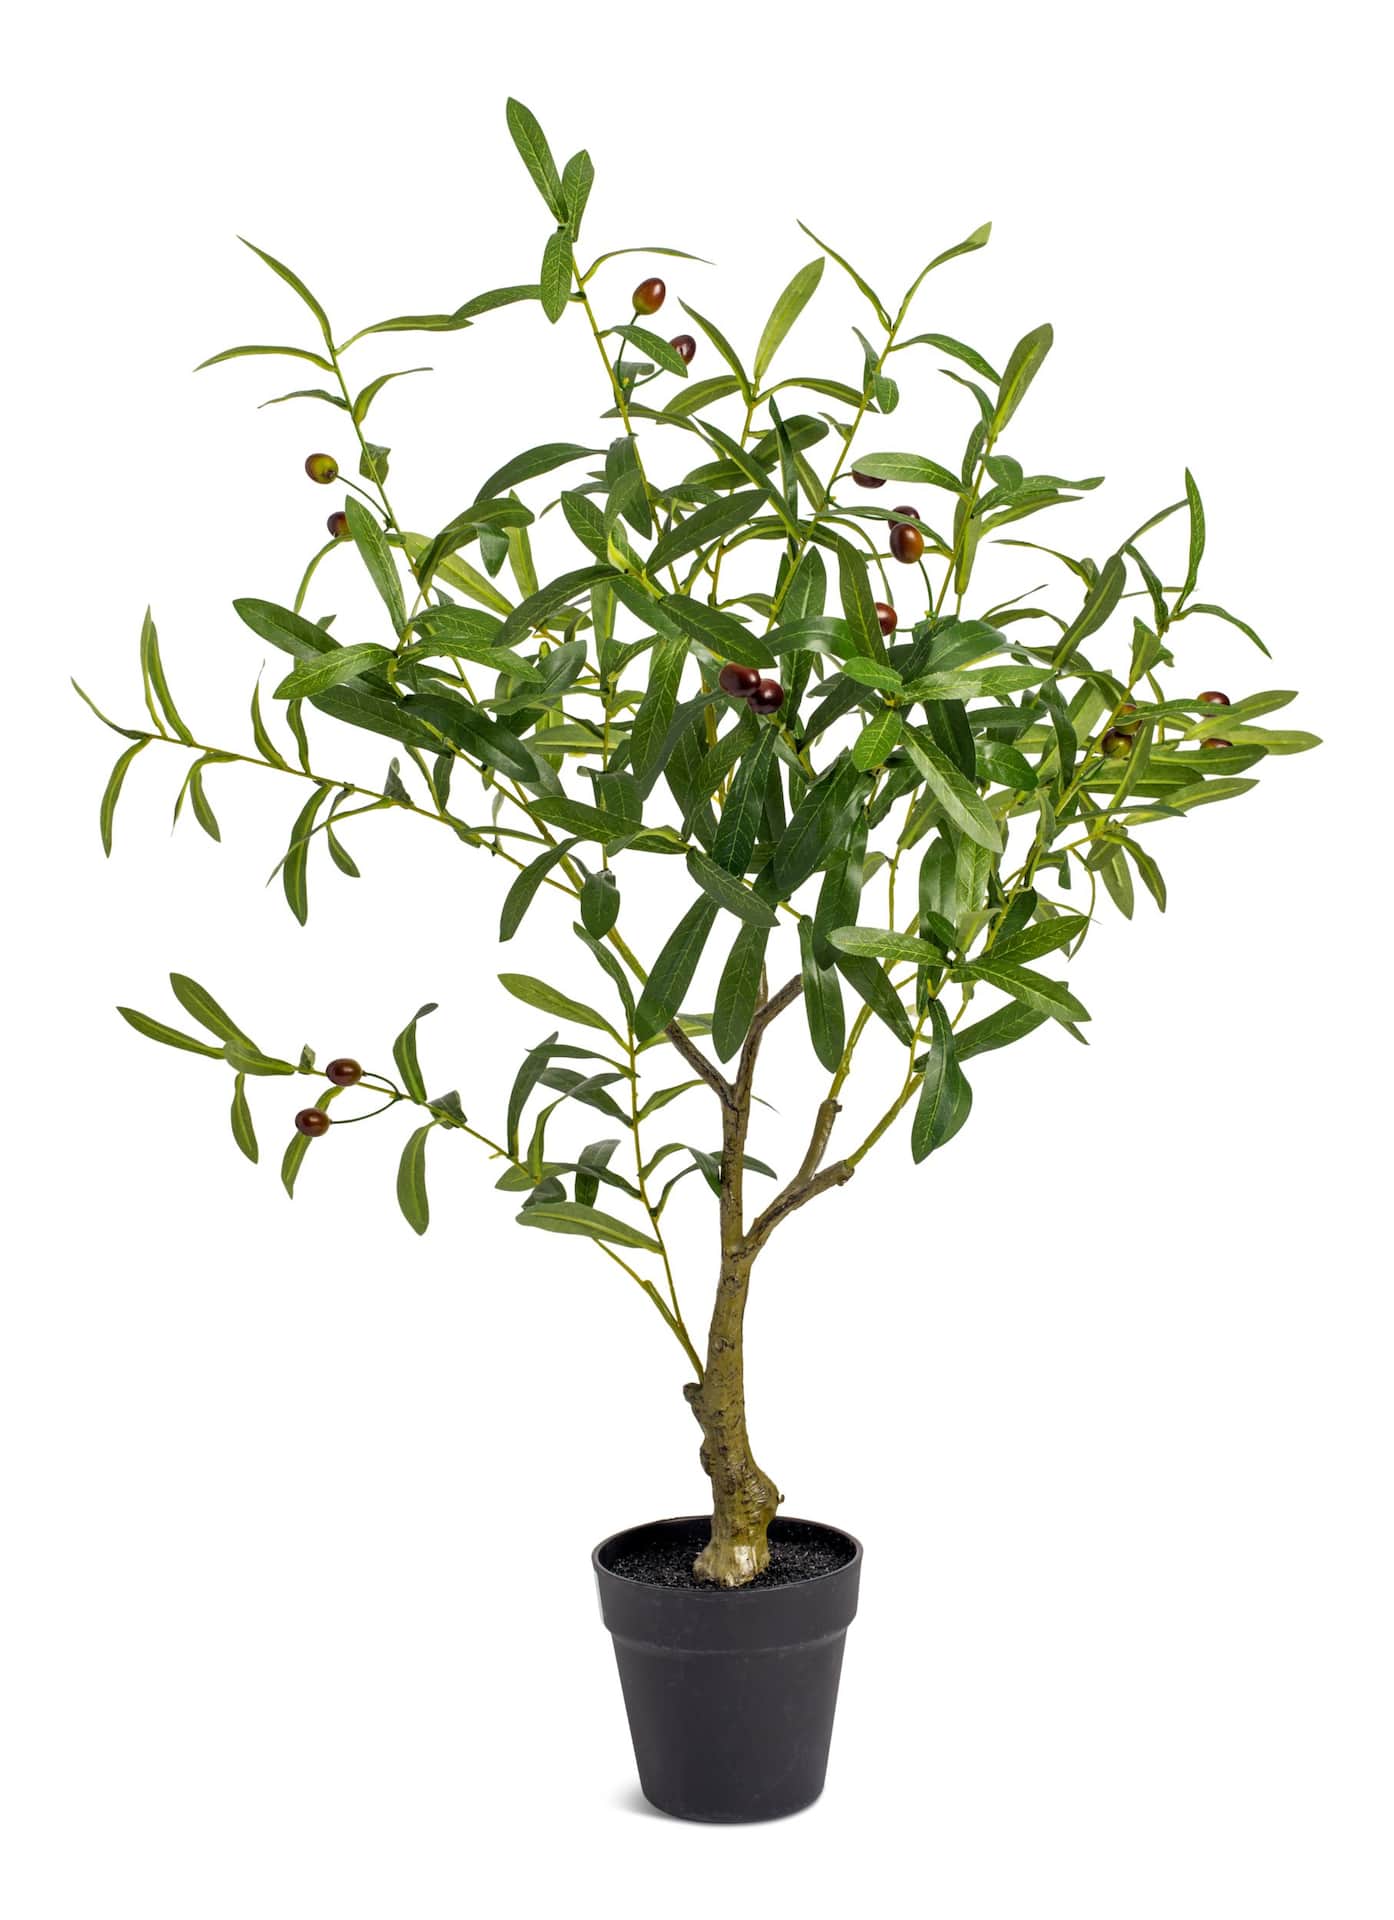 Naturae Décor Artificial Indoor/Outdoor Olive Tree in Black Pot